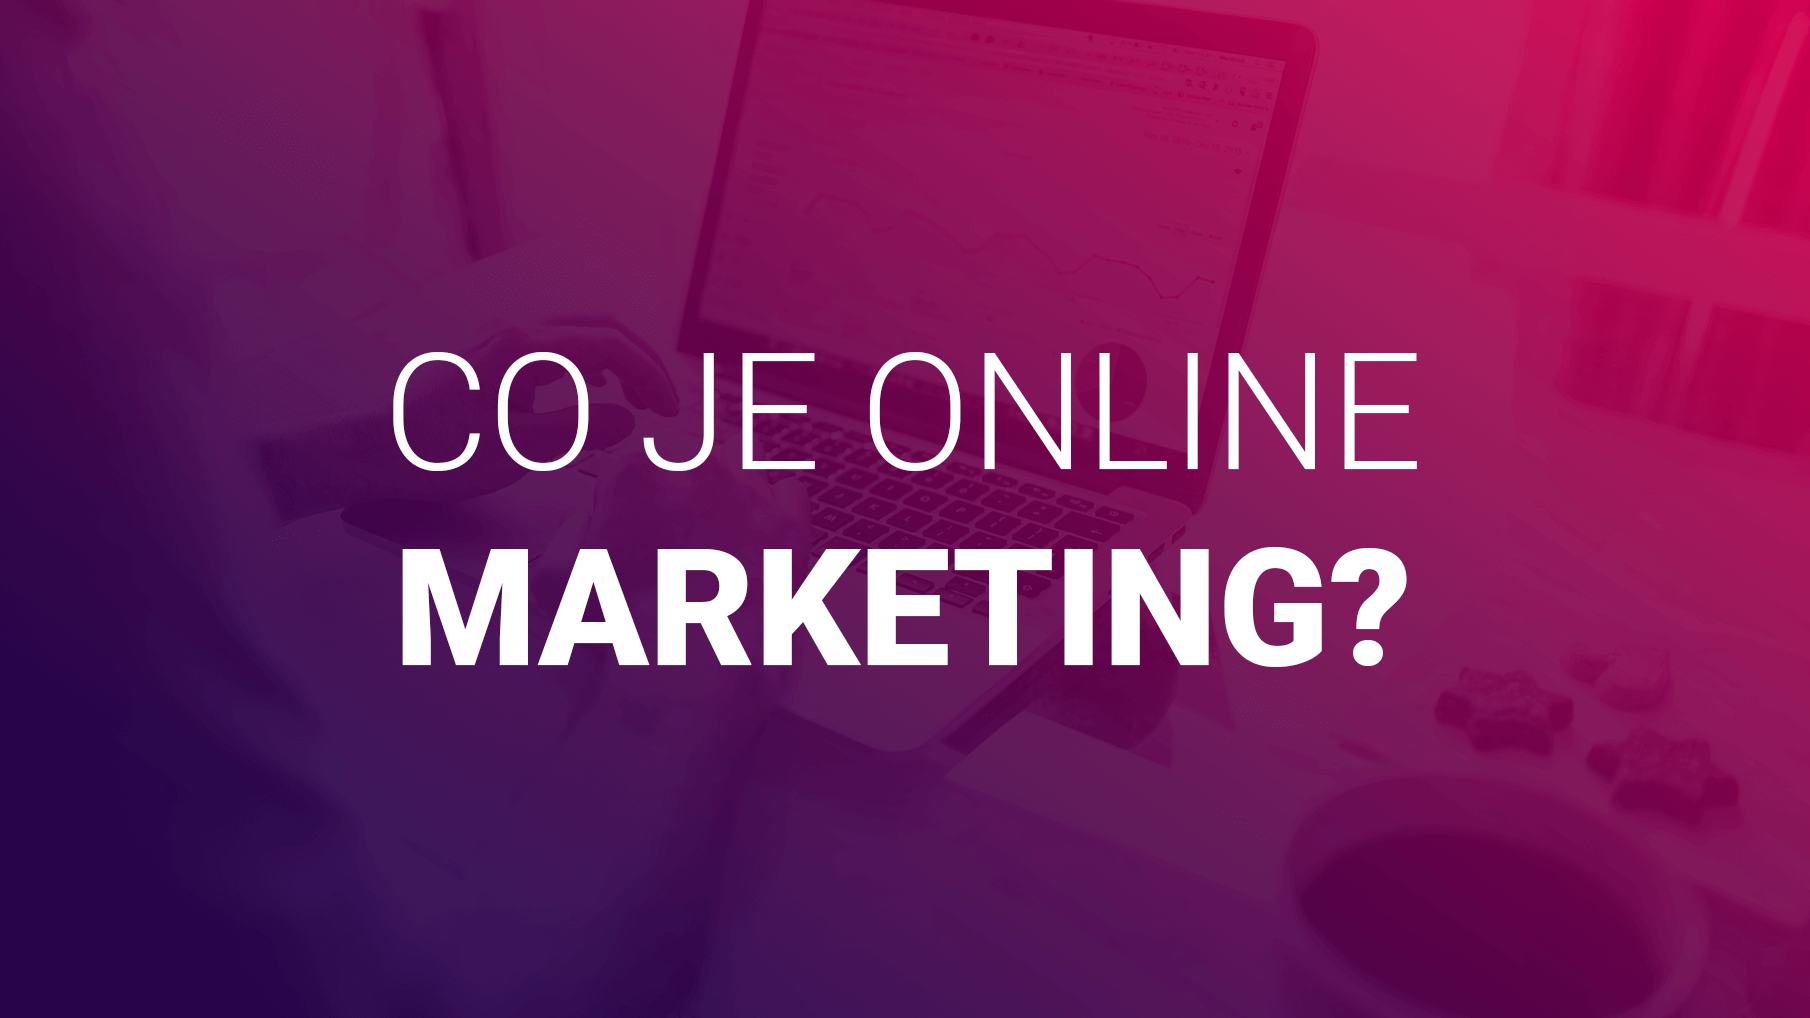 Co Je Online Marketing?